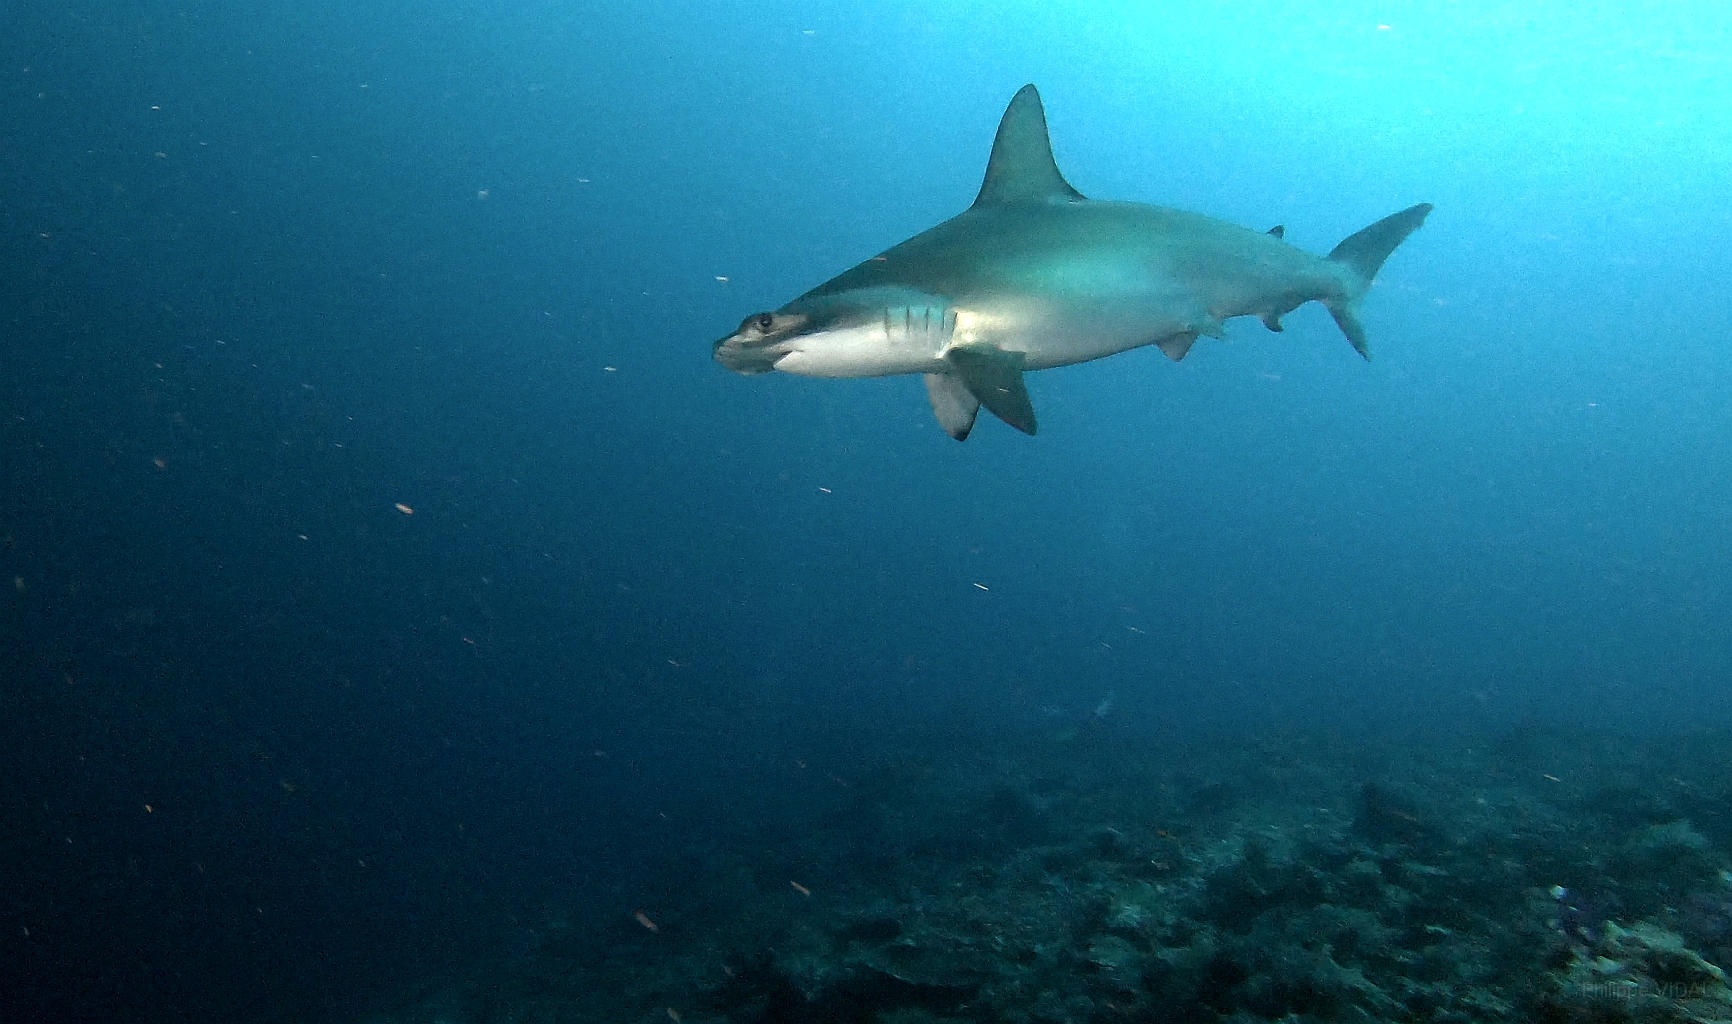 Banda Sea 2018 - 2 - Hammer Shark - Requin marteau.jpg